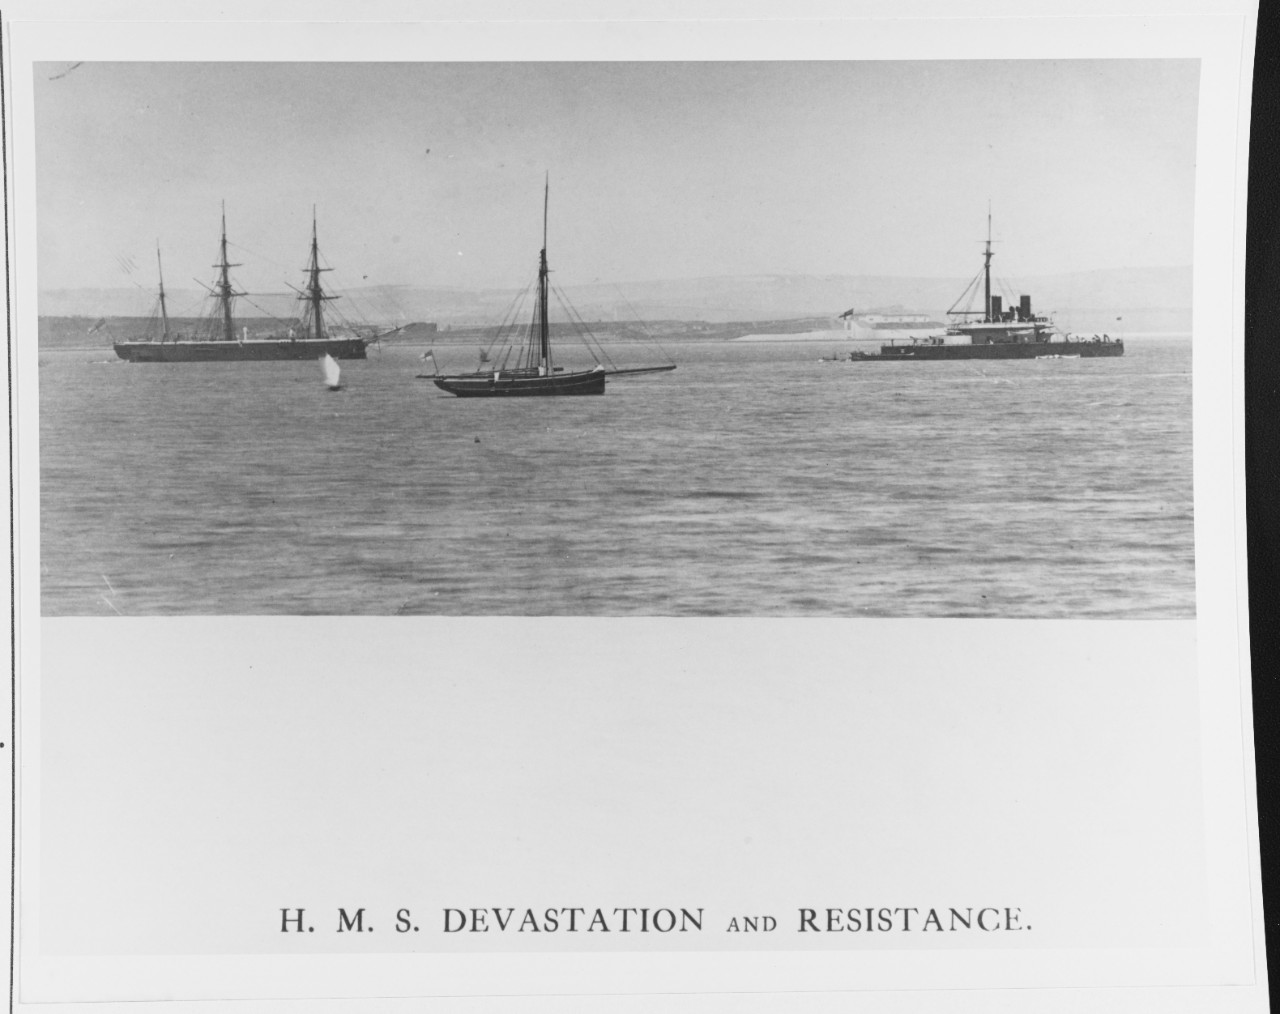 HMS RESISTANCE (LEFT) (BRITISH BATTLESHIP, 1861) AND HMS DEVISTATIO N (RIGHT) (BRITISH BATTLESHIP, 1871)